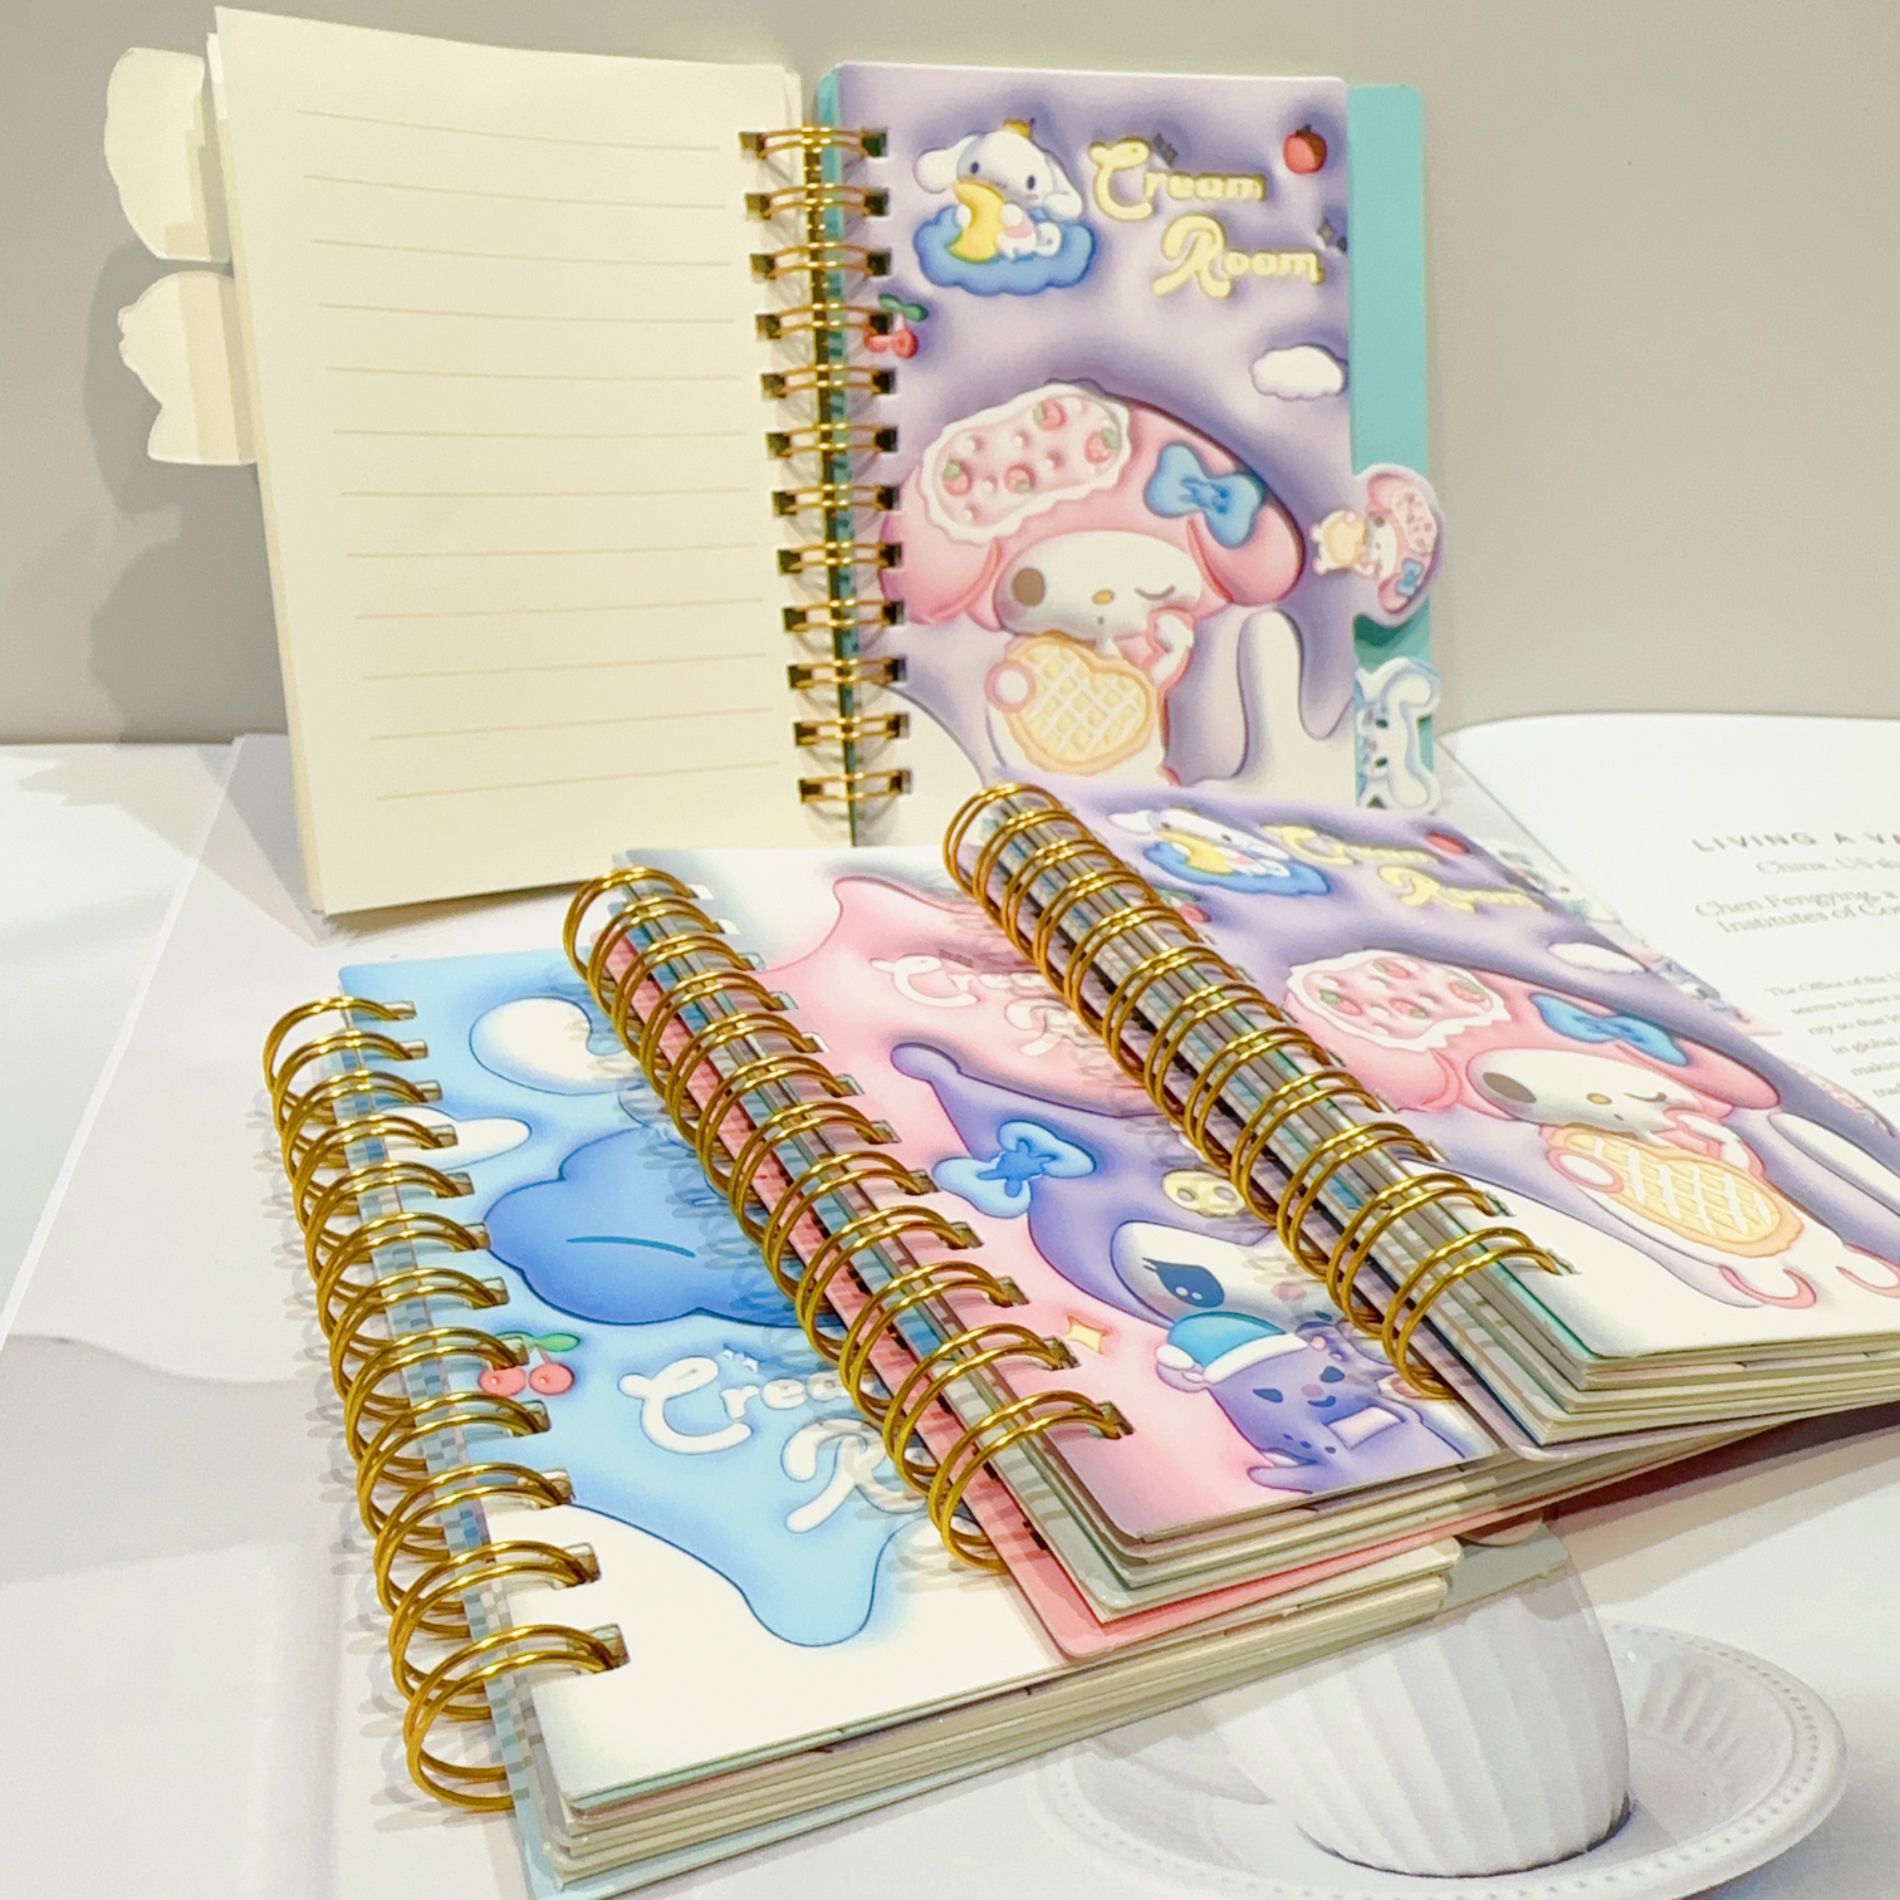 New Sanliou Coil Notebook Acrylic Cartoon Pendant Notebook Girl Heart 3D Expansion Notepad Journal Book